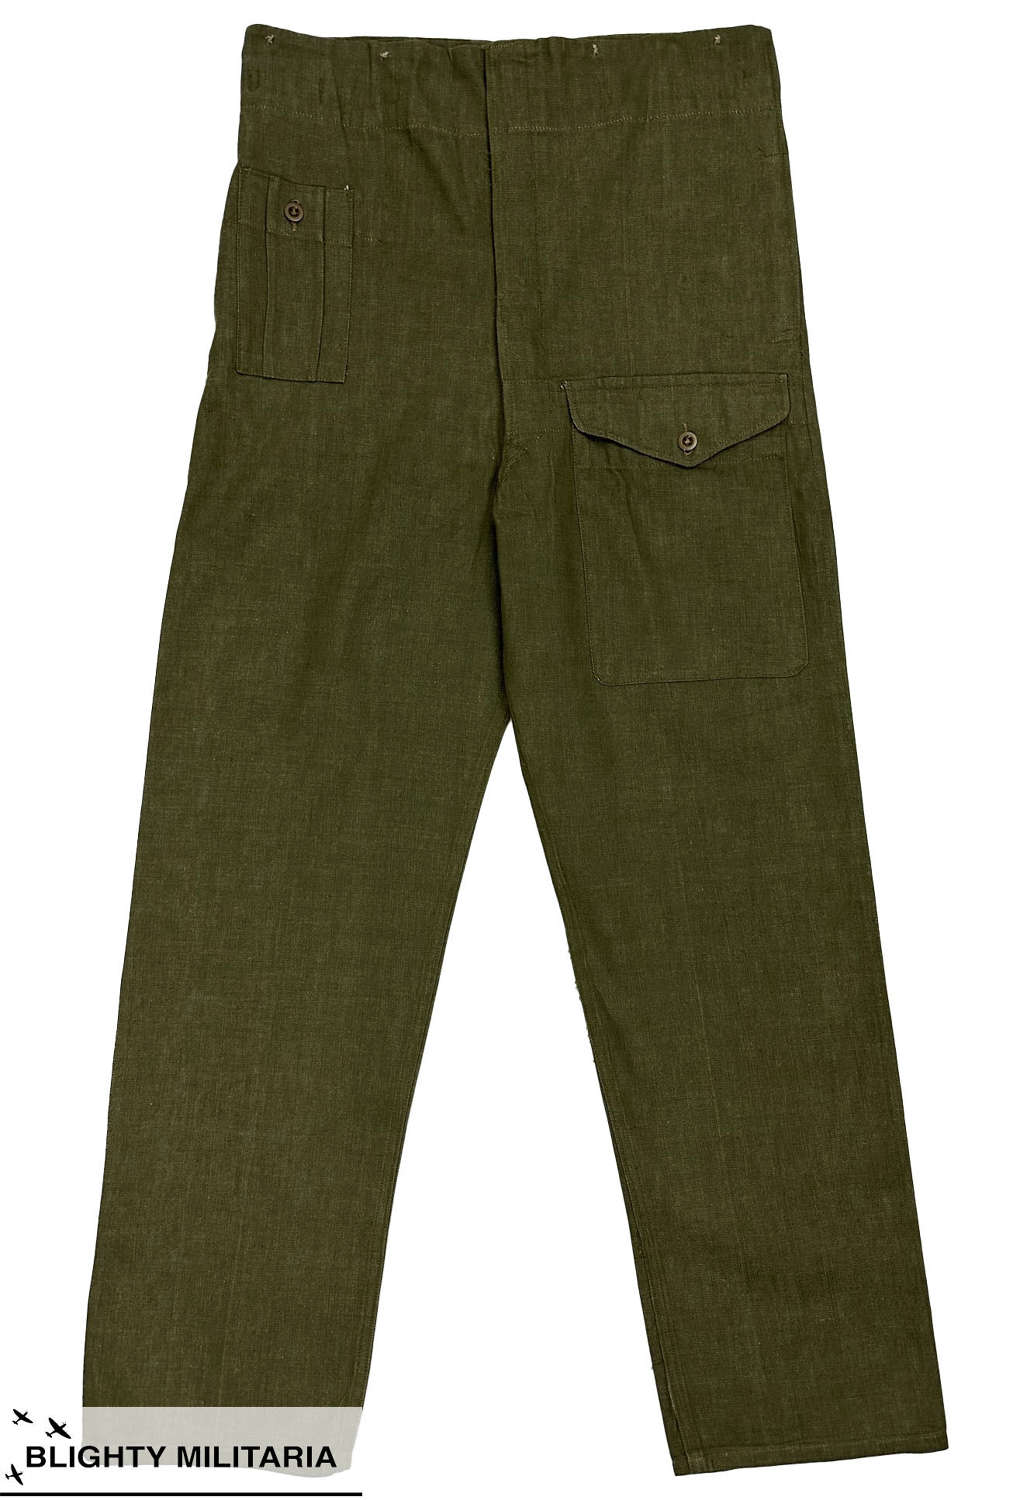 Original 1956 Dated British Army Denim Battledress Trousers - Size 11